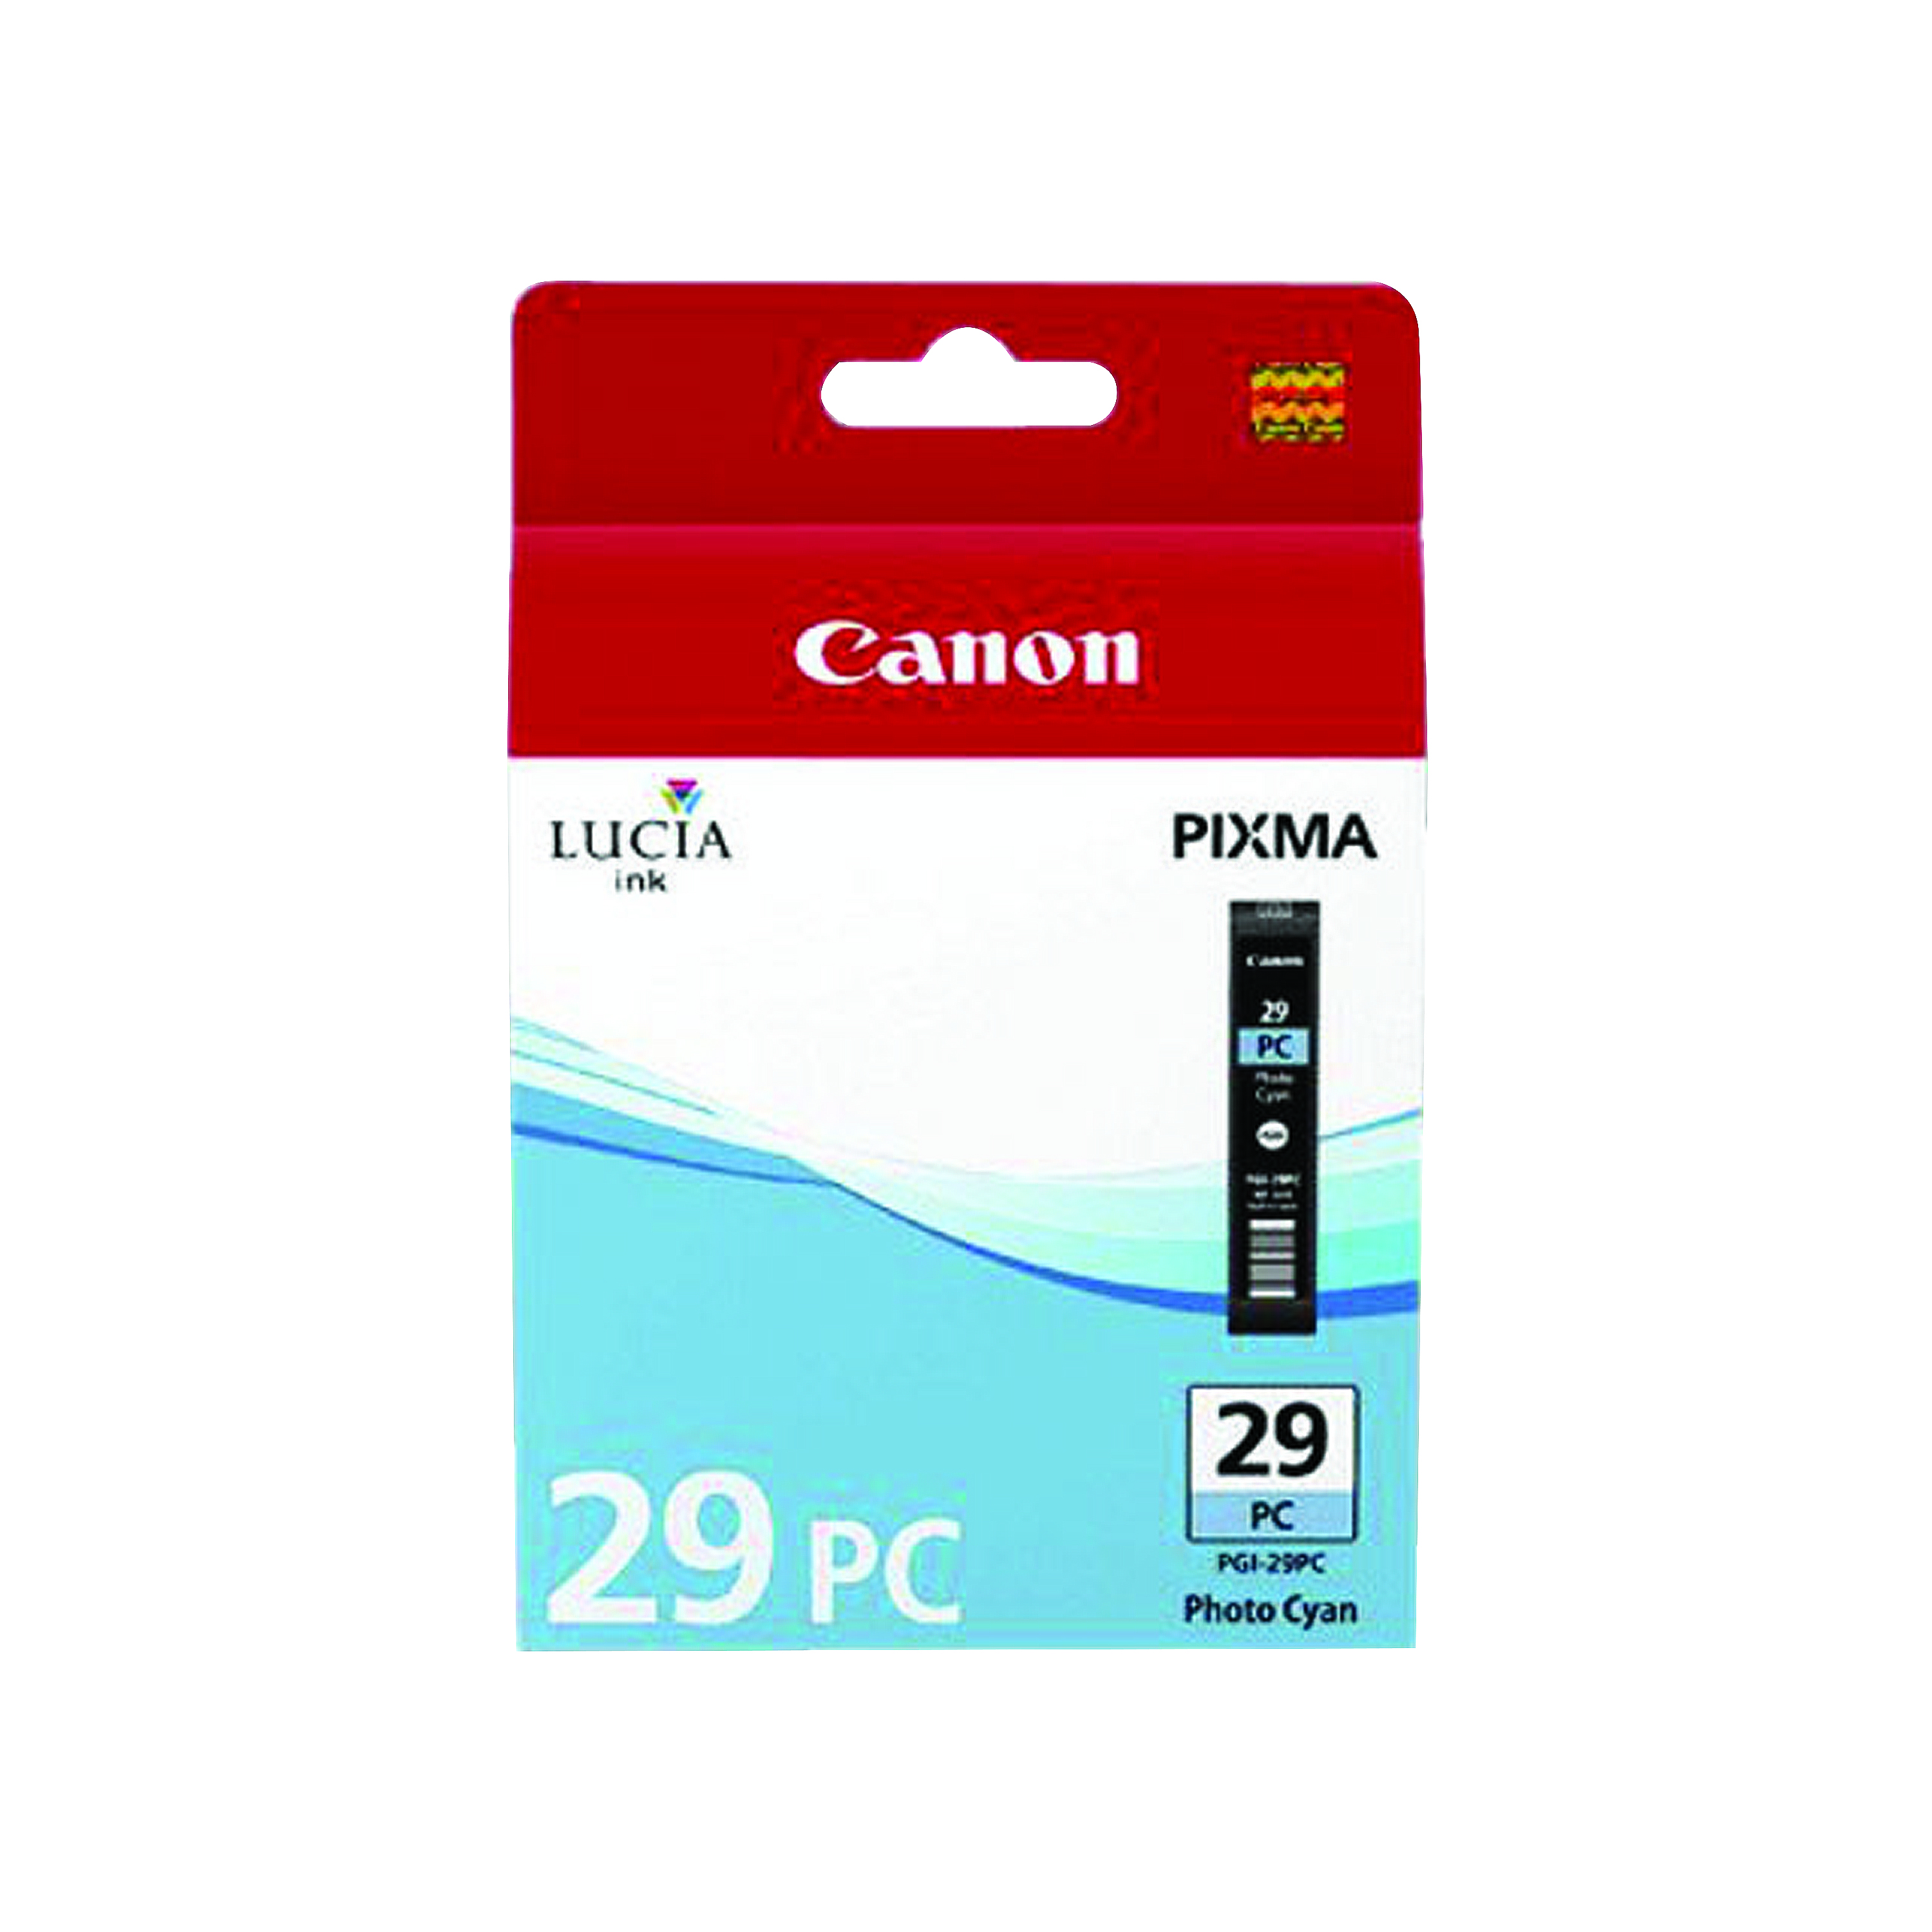 Canon Photo PGI-29 PIXMA PRO-1 Cyan Ink Cartridge 4876B001